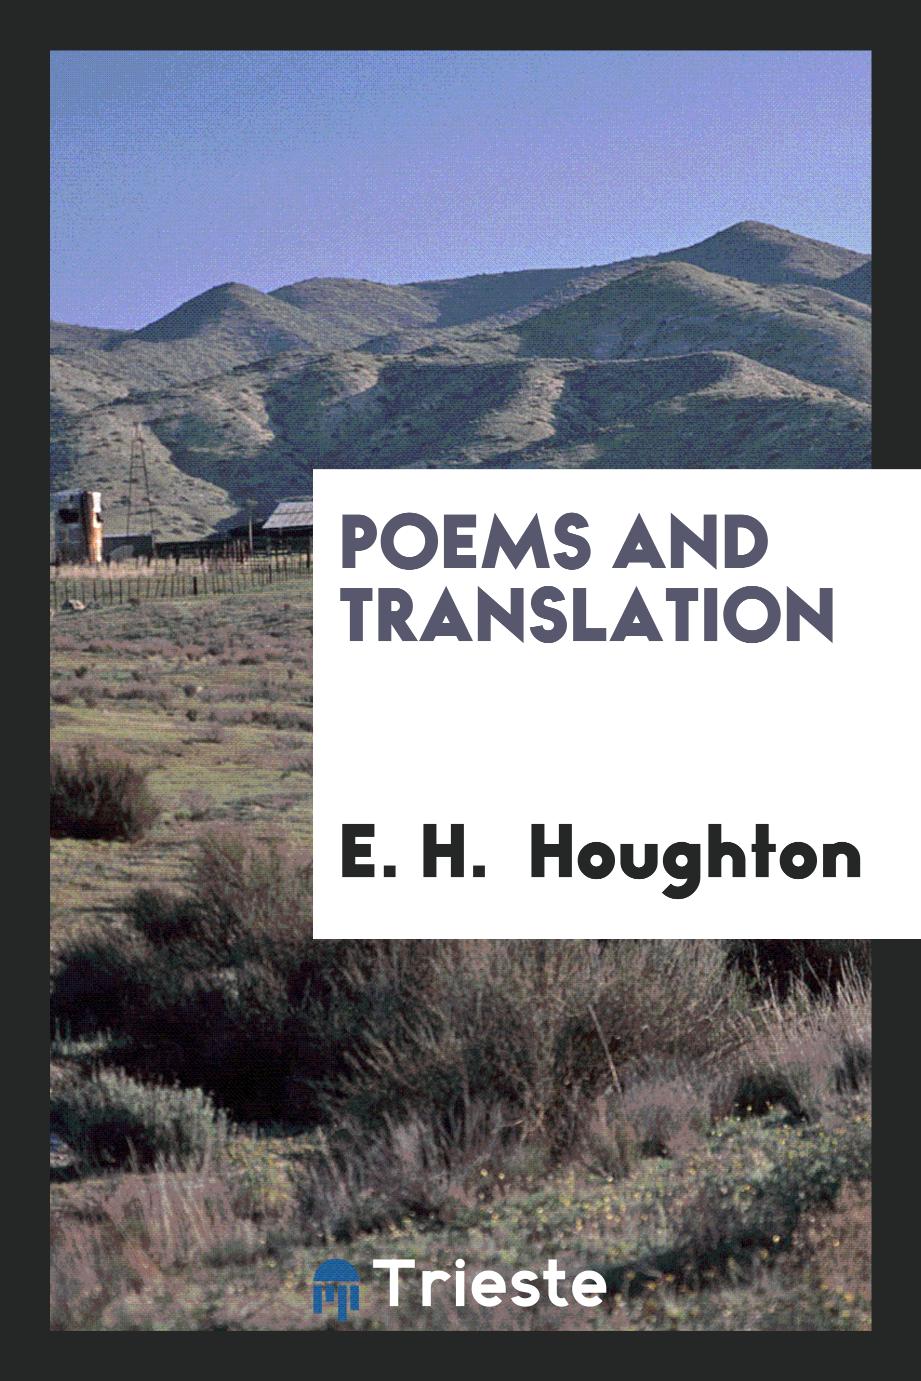 Poems and translation